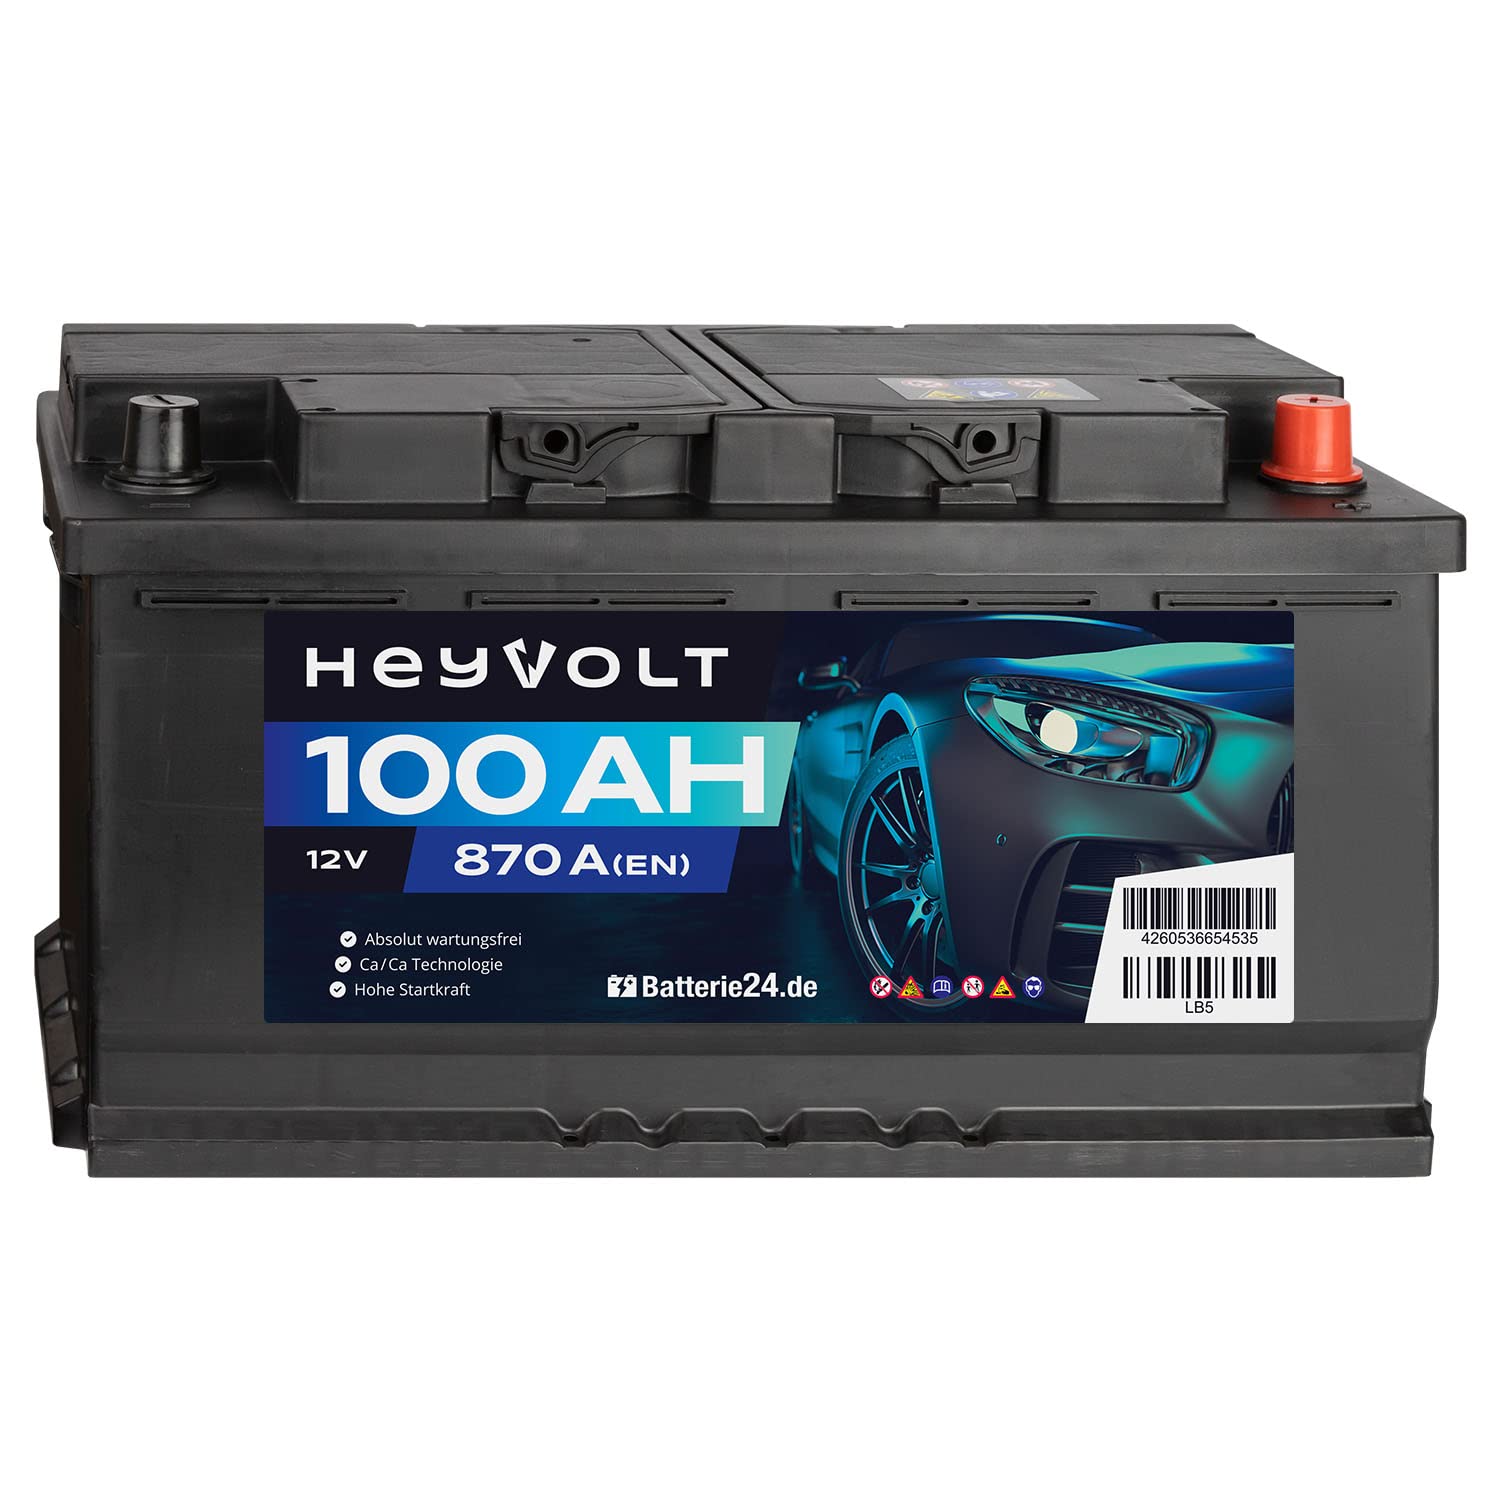 HeyVolt Autobatterie, lead acid, 12V 100Ah 870A/EN Starterbatterie, absolut wartungsfrei ersetzt 85Ah 88Ah 92Ah 95Ah, für PKW von Batterie24.de